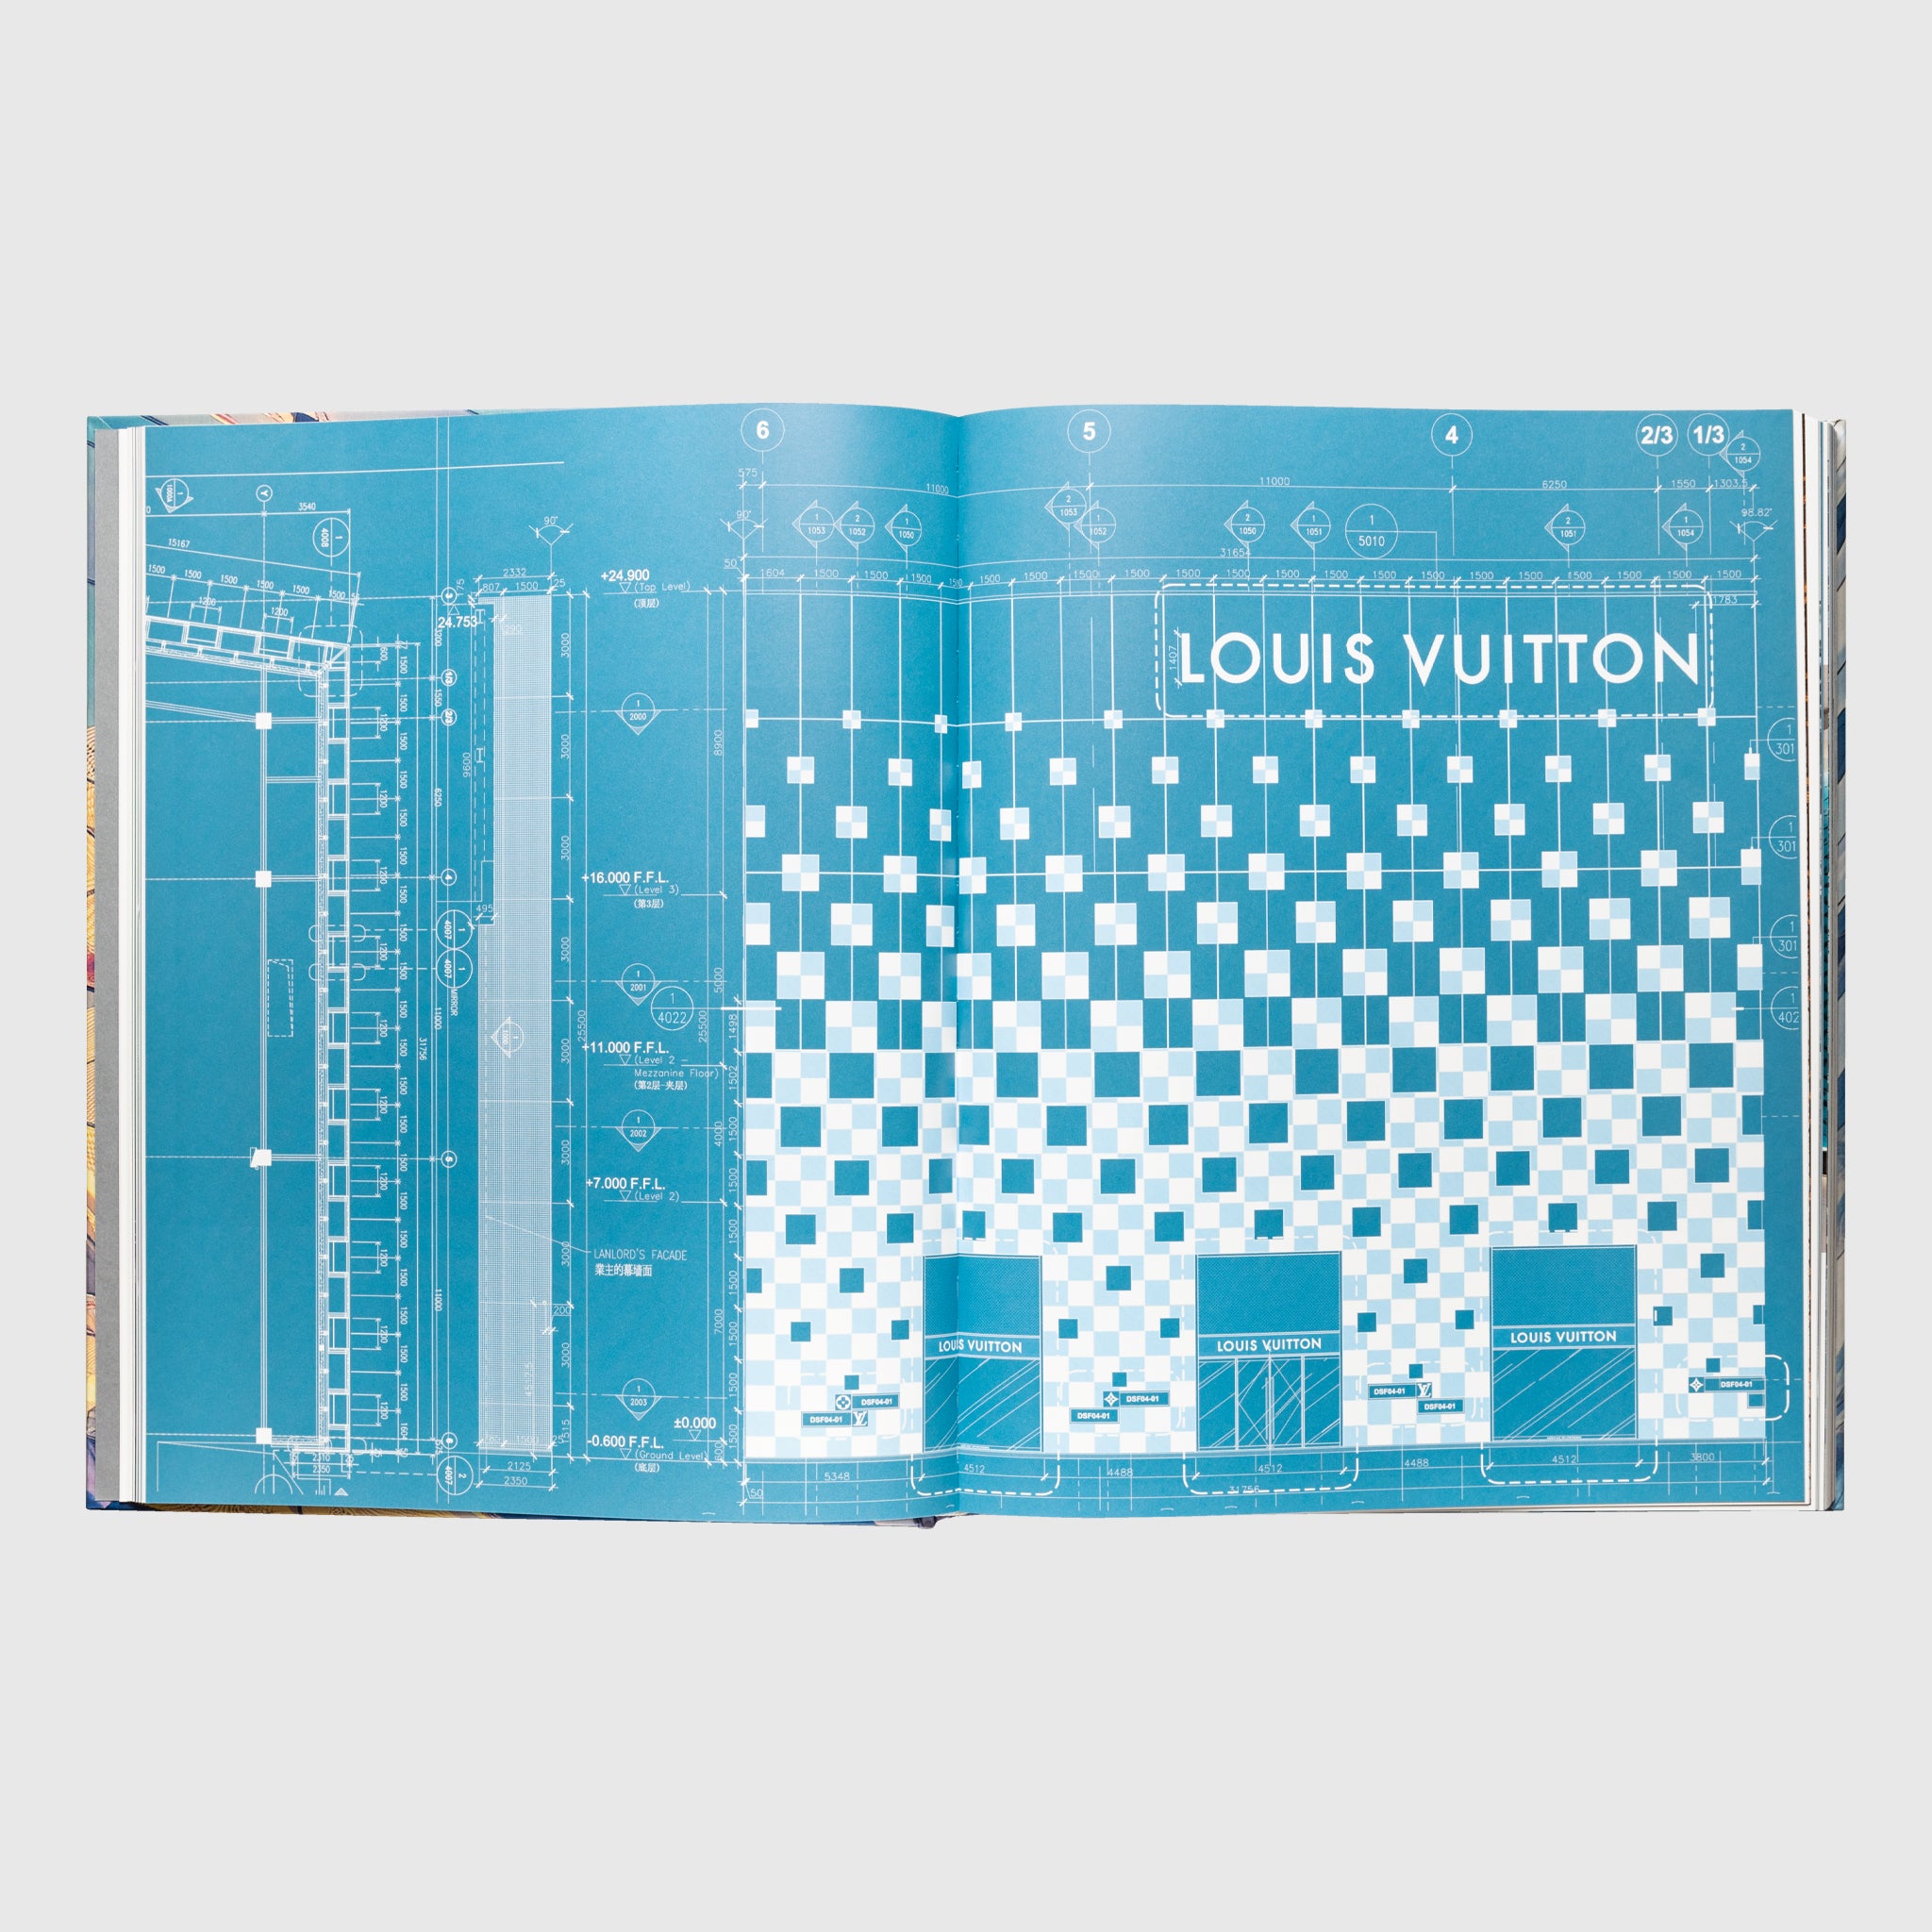 Louis Vuitton Skin: Architecture of Luxury Paris, English Version